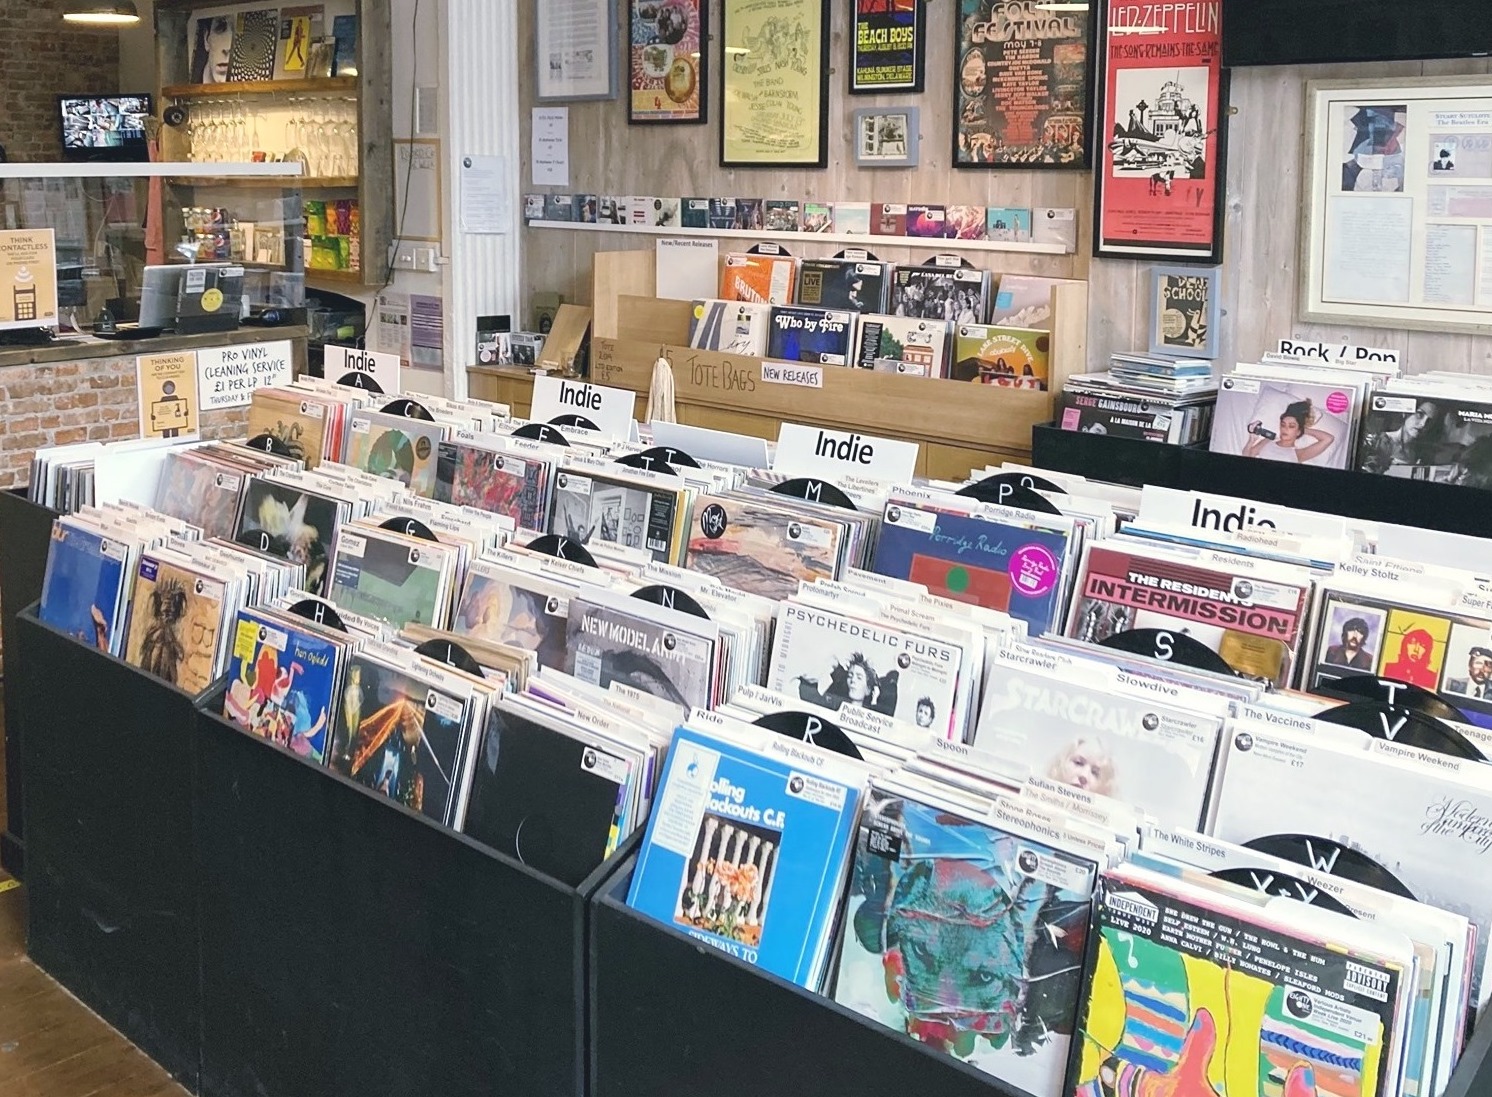 81 Renshaw Record Shop Liverpool